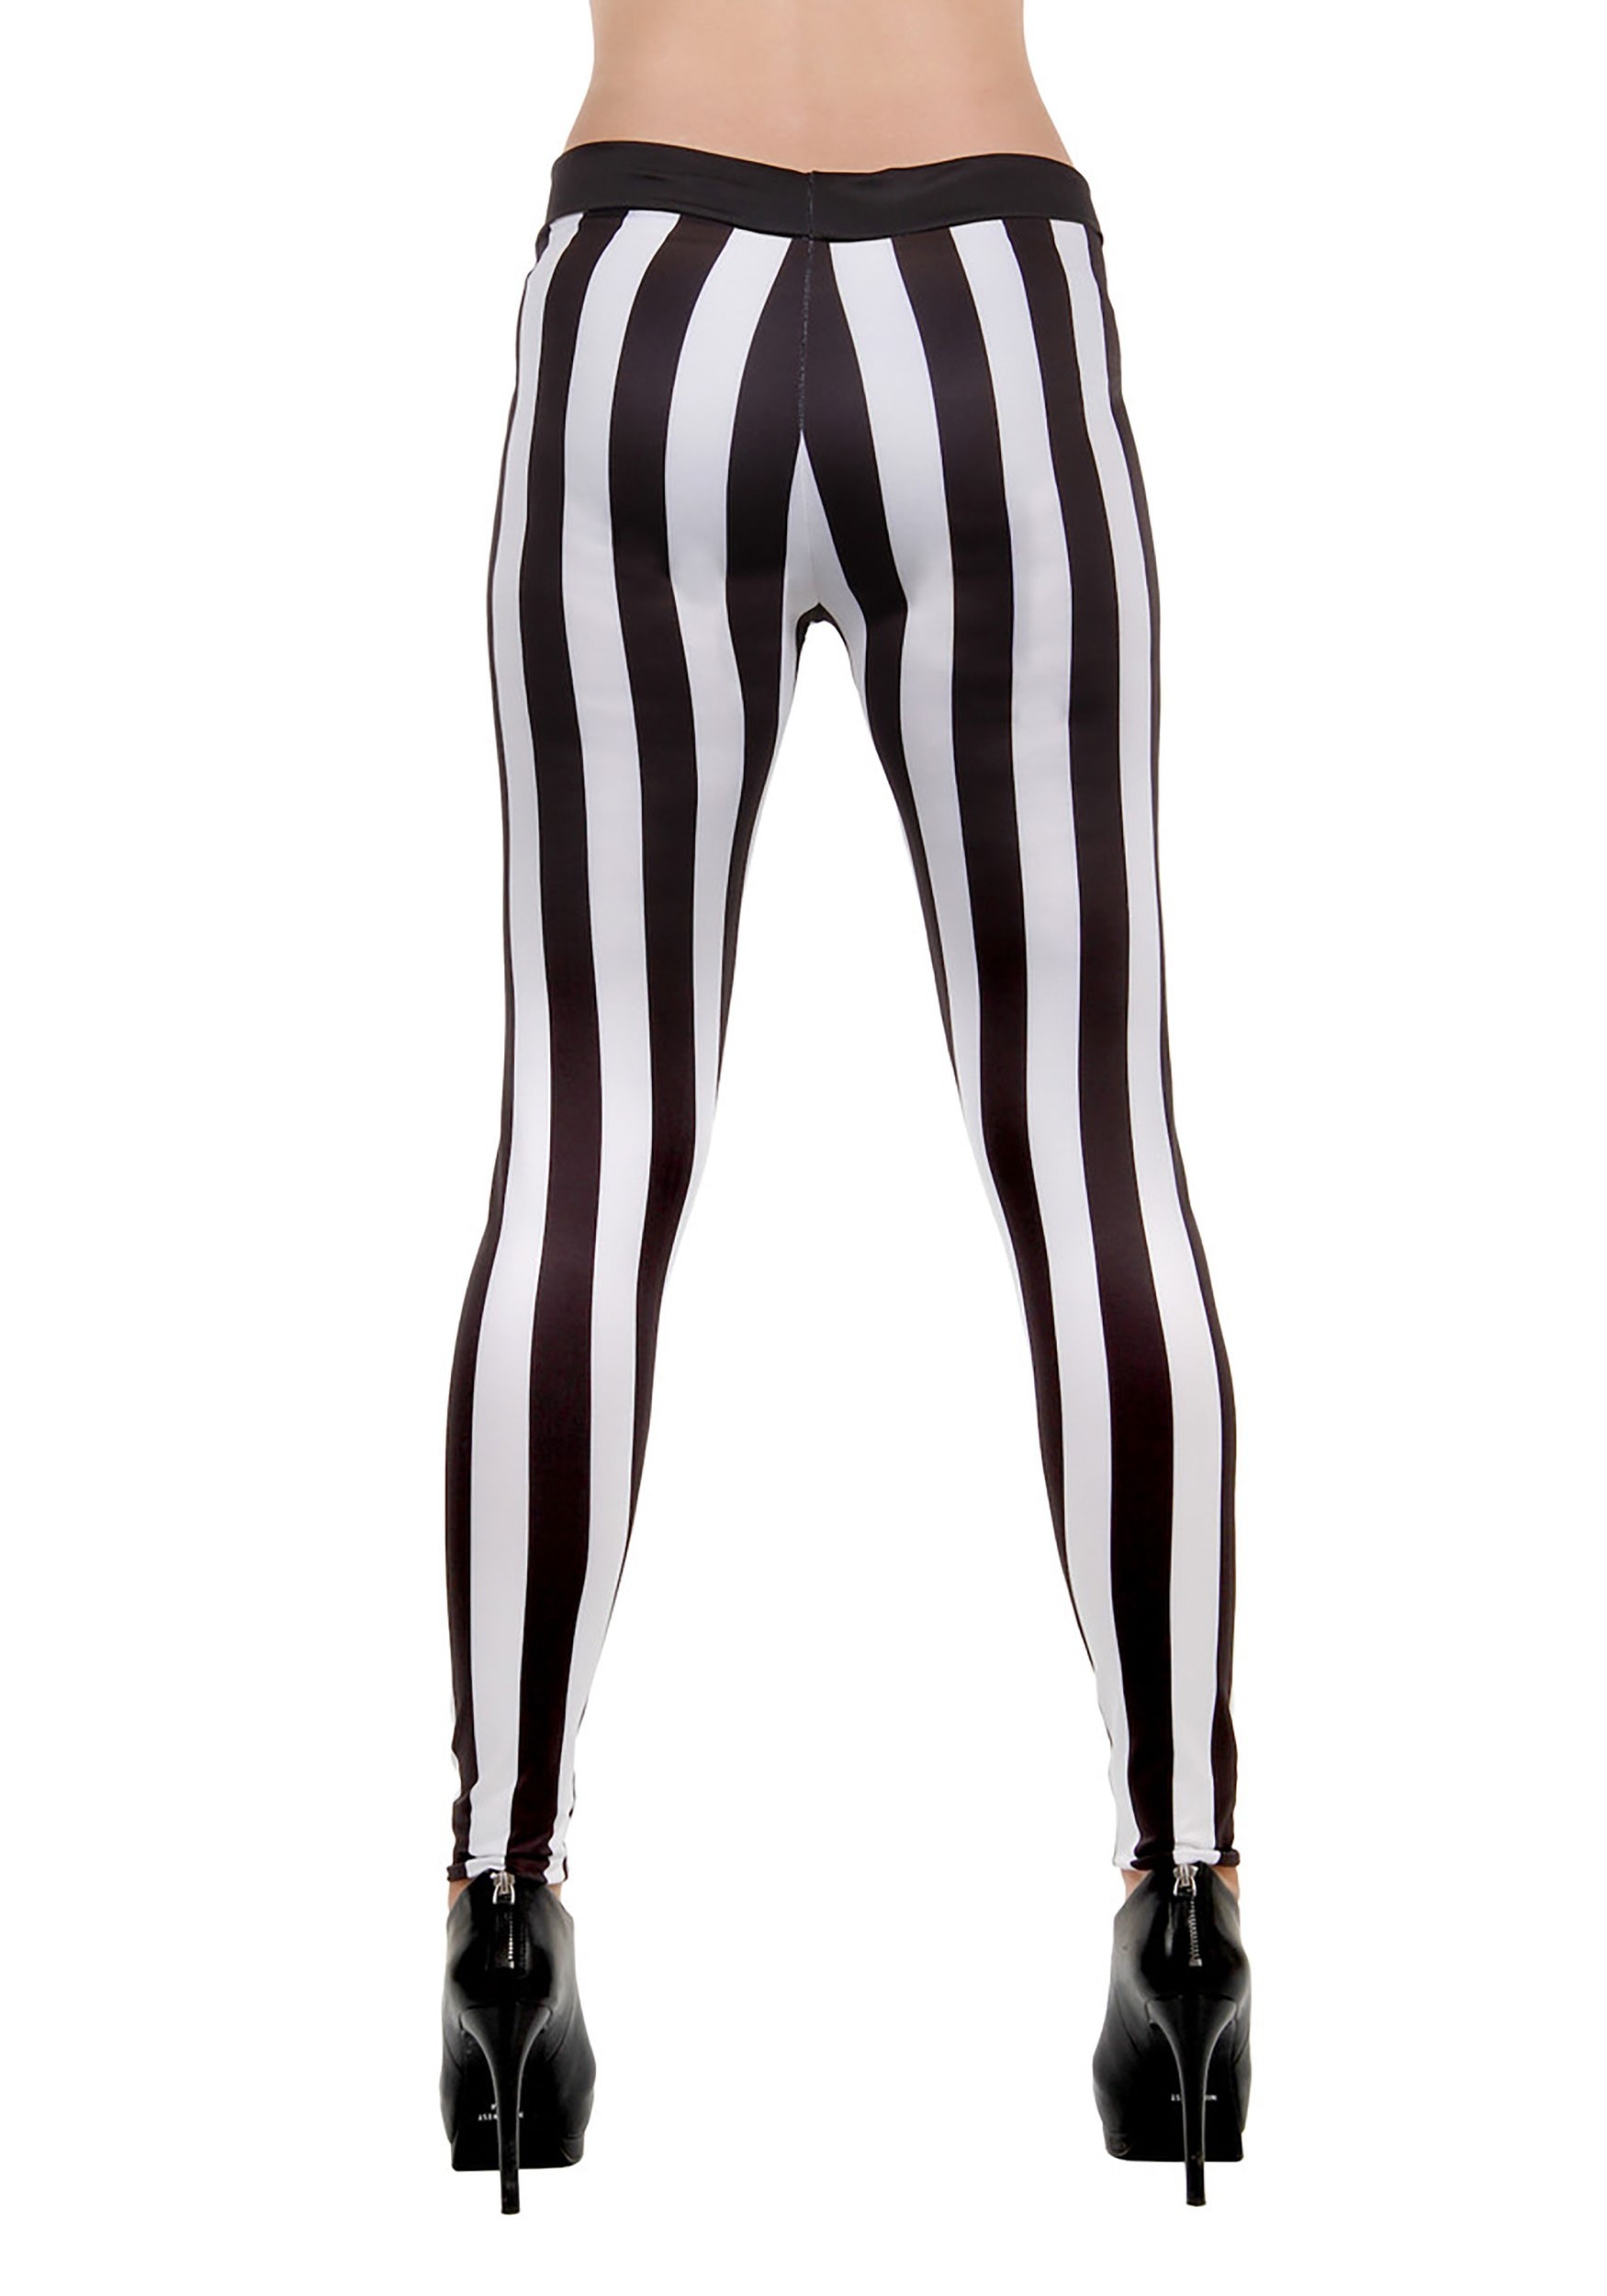 Black White Striped Leggings Costume Pants Accessory Halloween Adult